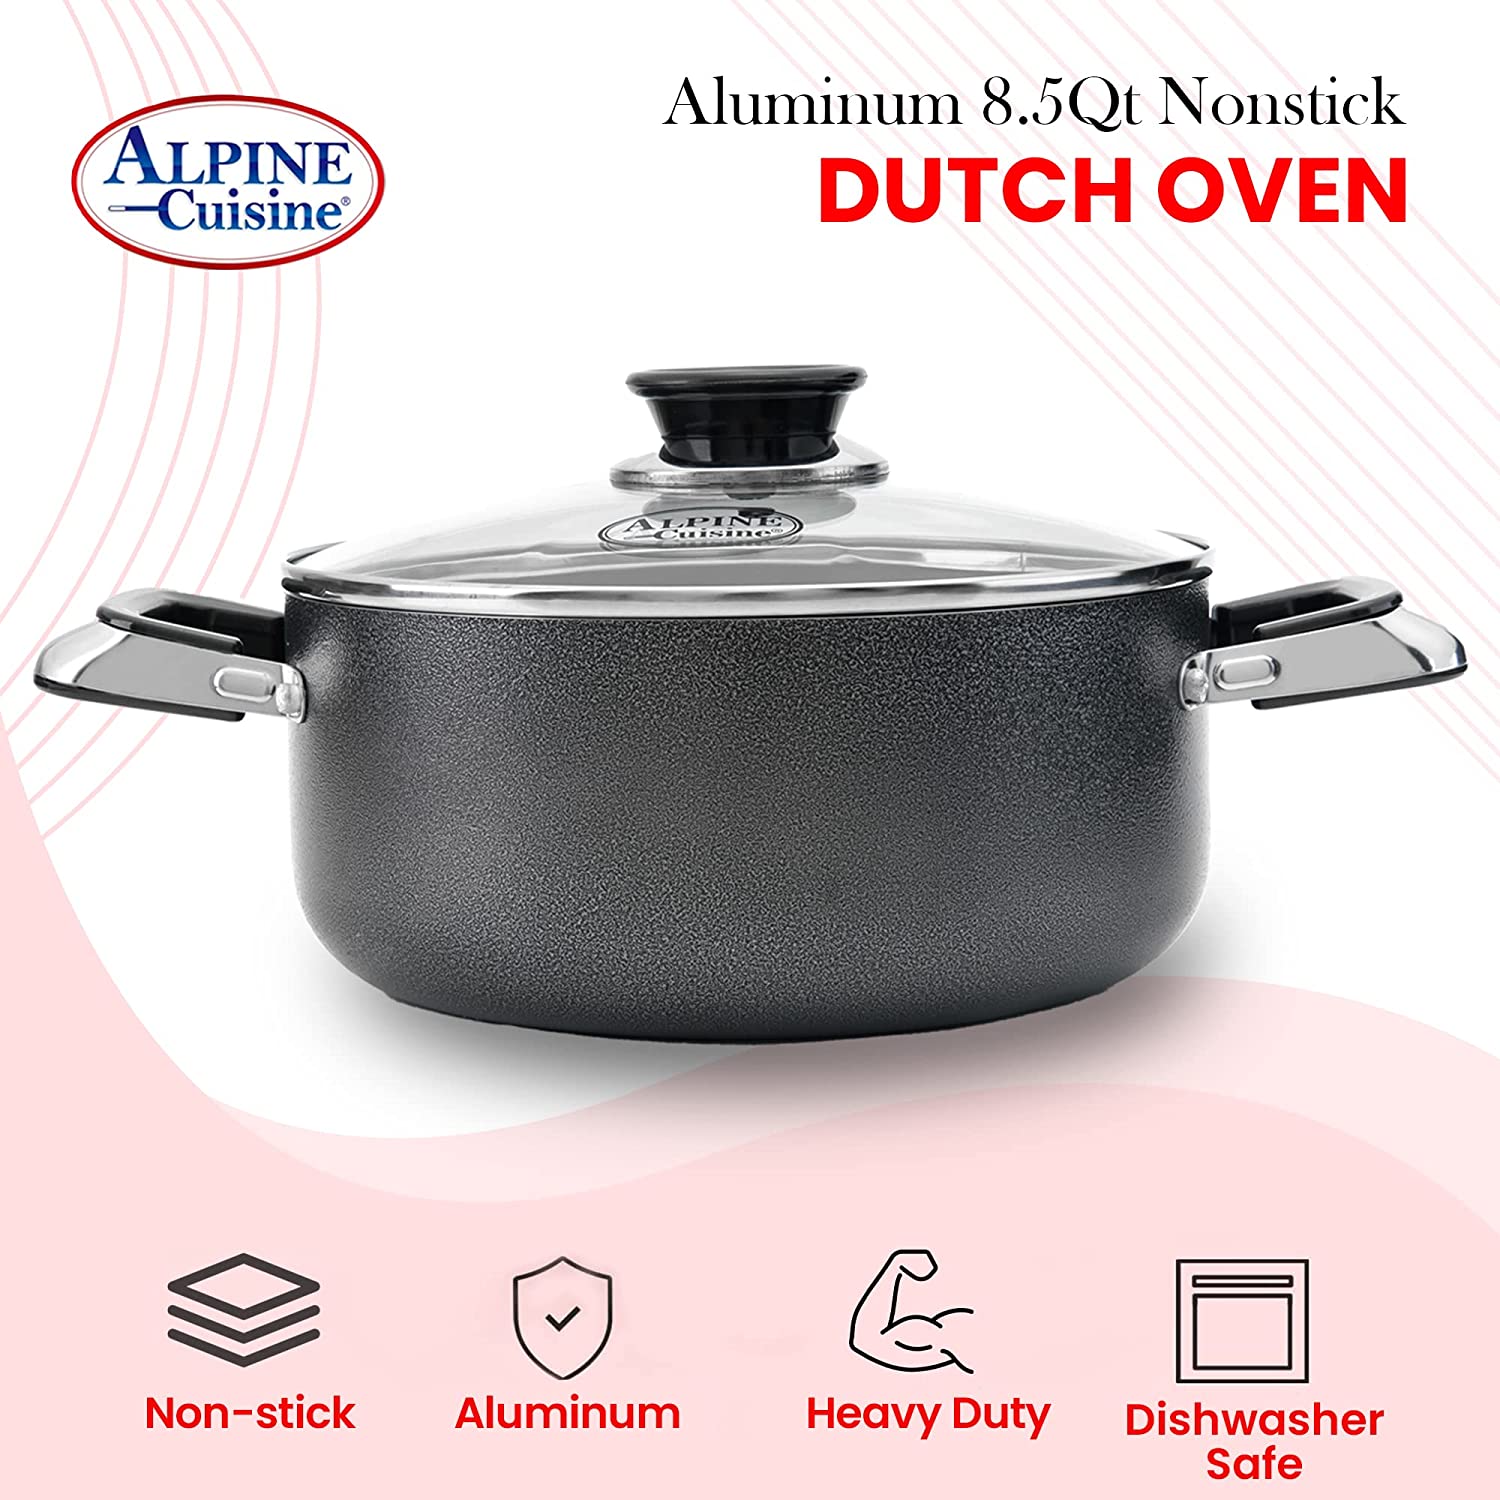 Alpine Cuisine 10 qt. Aluminum Dutch Oven